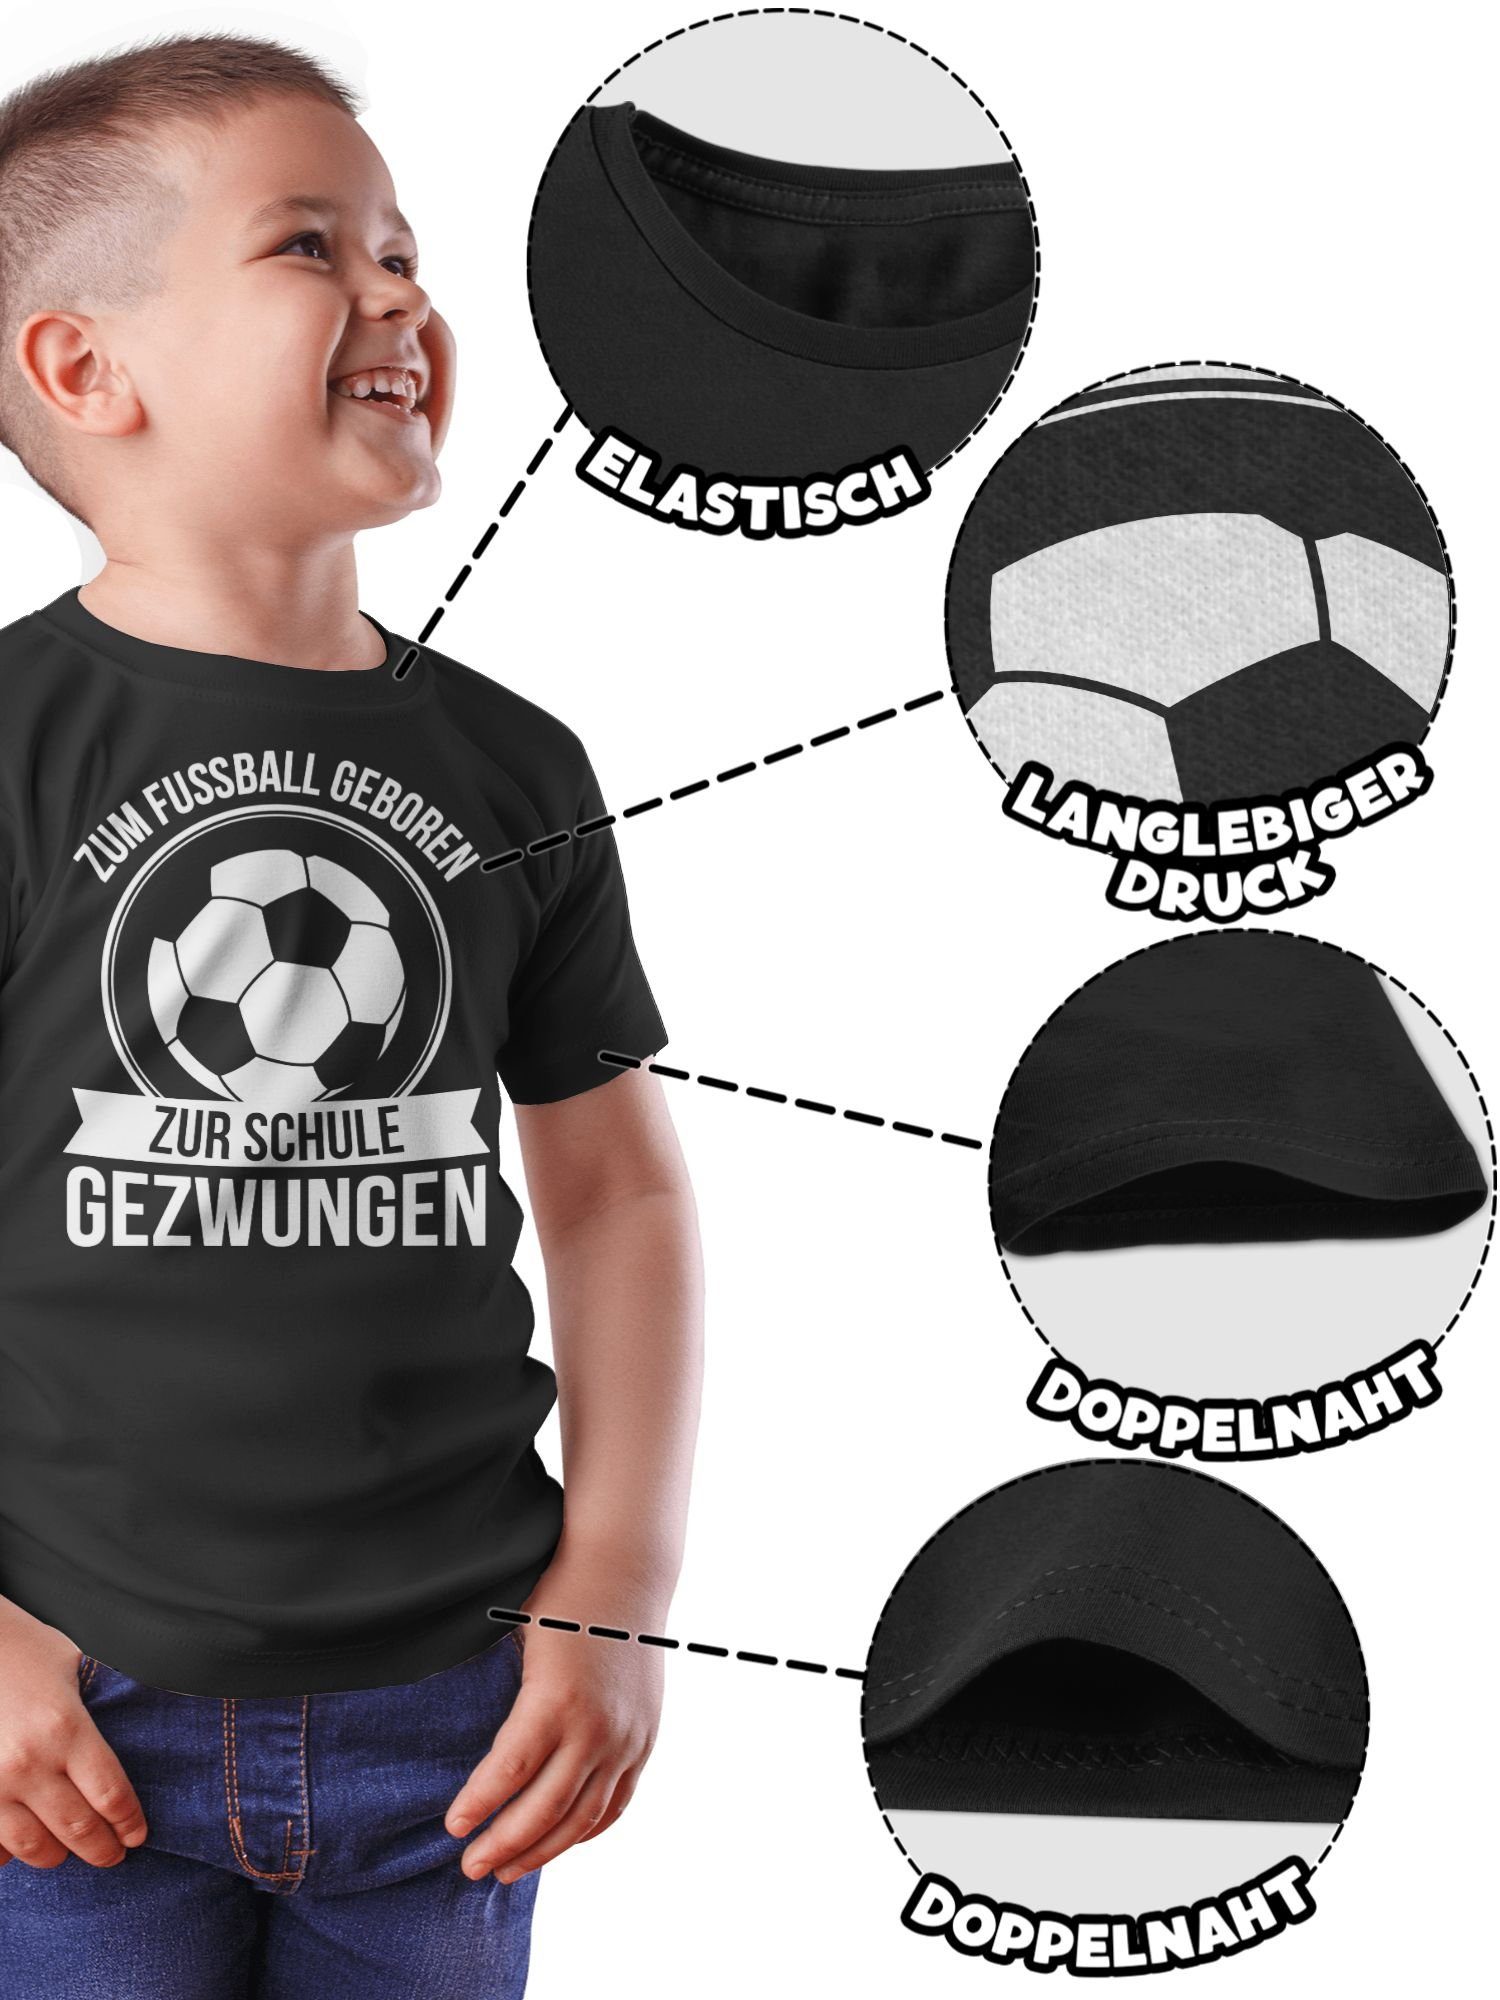 Schwarz T-Shirt Zum Geschenke Shirtracer Schule Schulanfang 01 Einschulung zur Junge gezwungen geboren Fußball